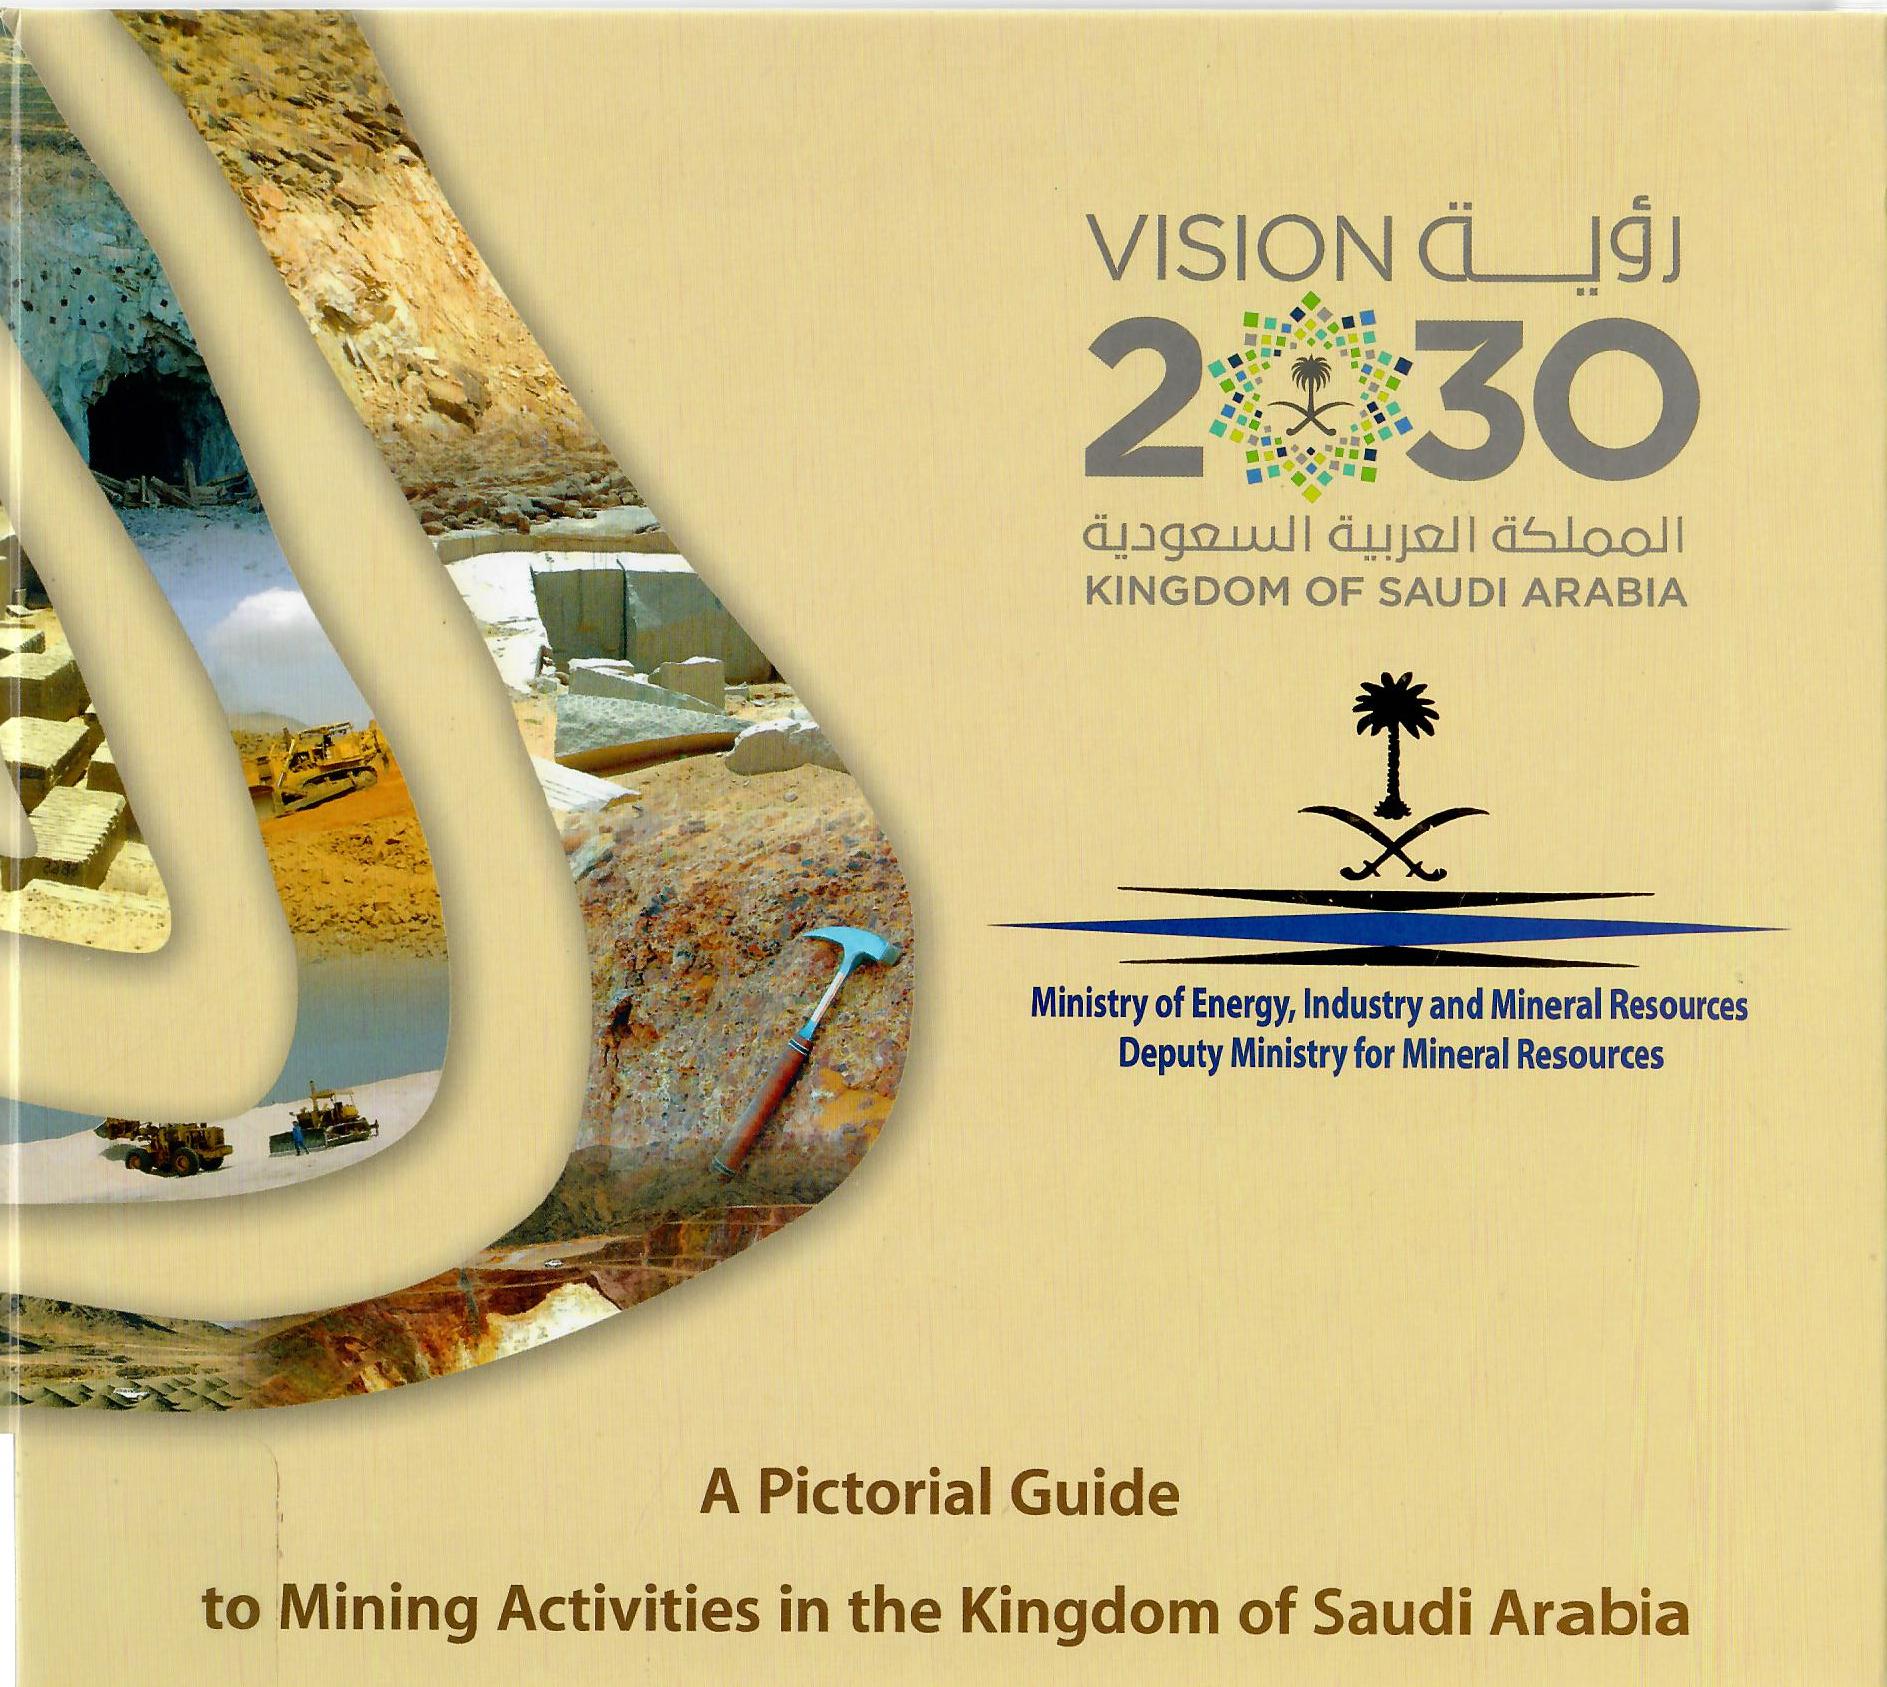 VISION 2030 KINGDOM OF SAUDI ARABIA